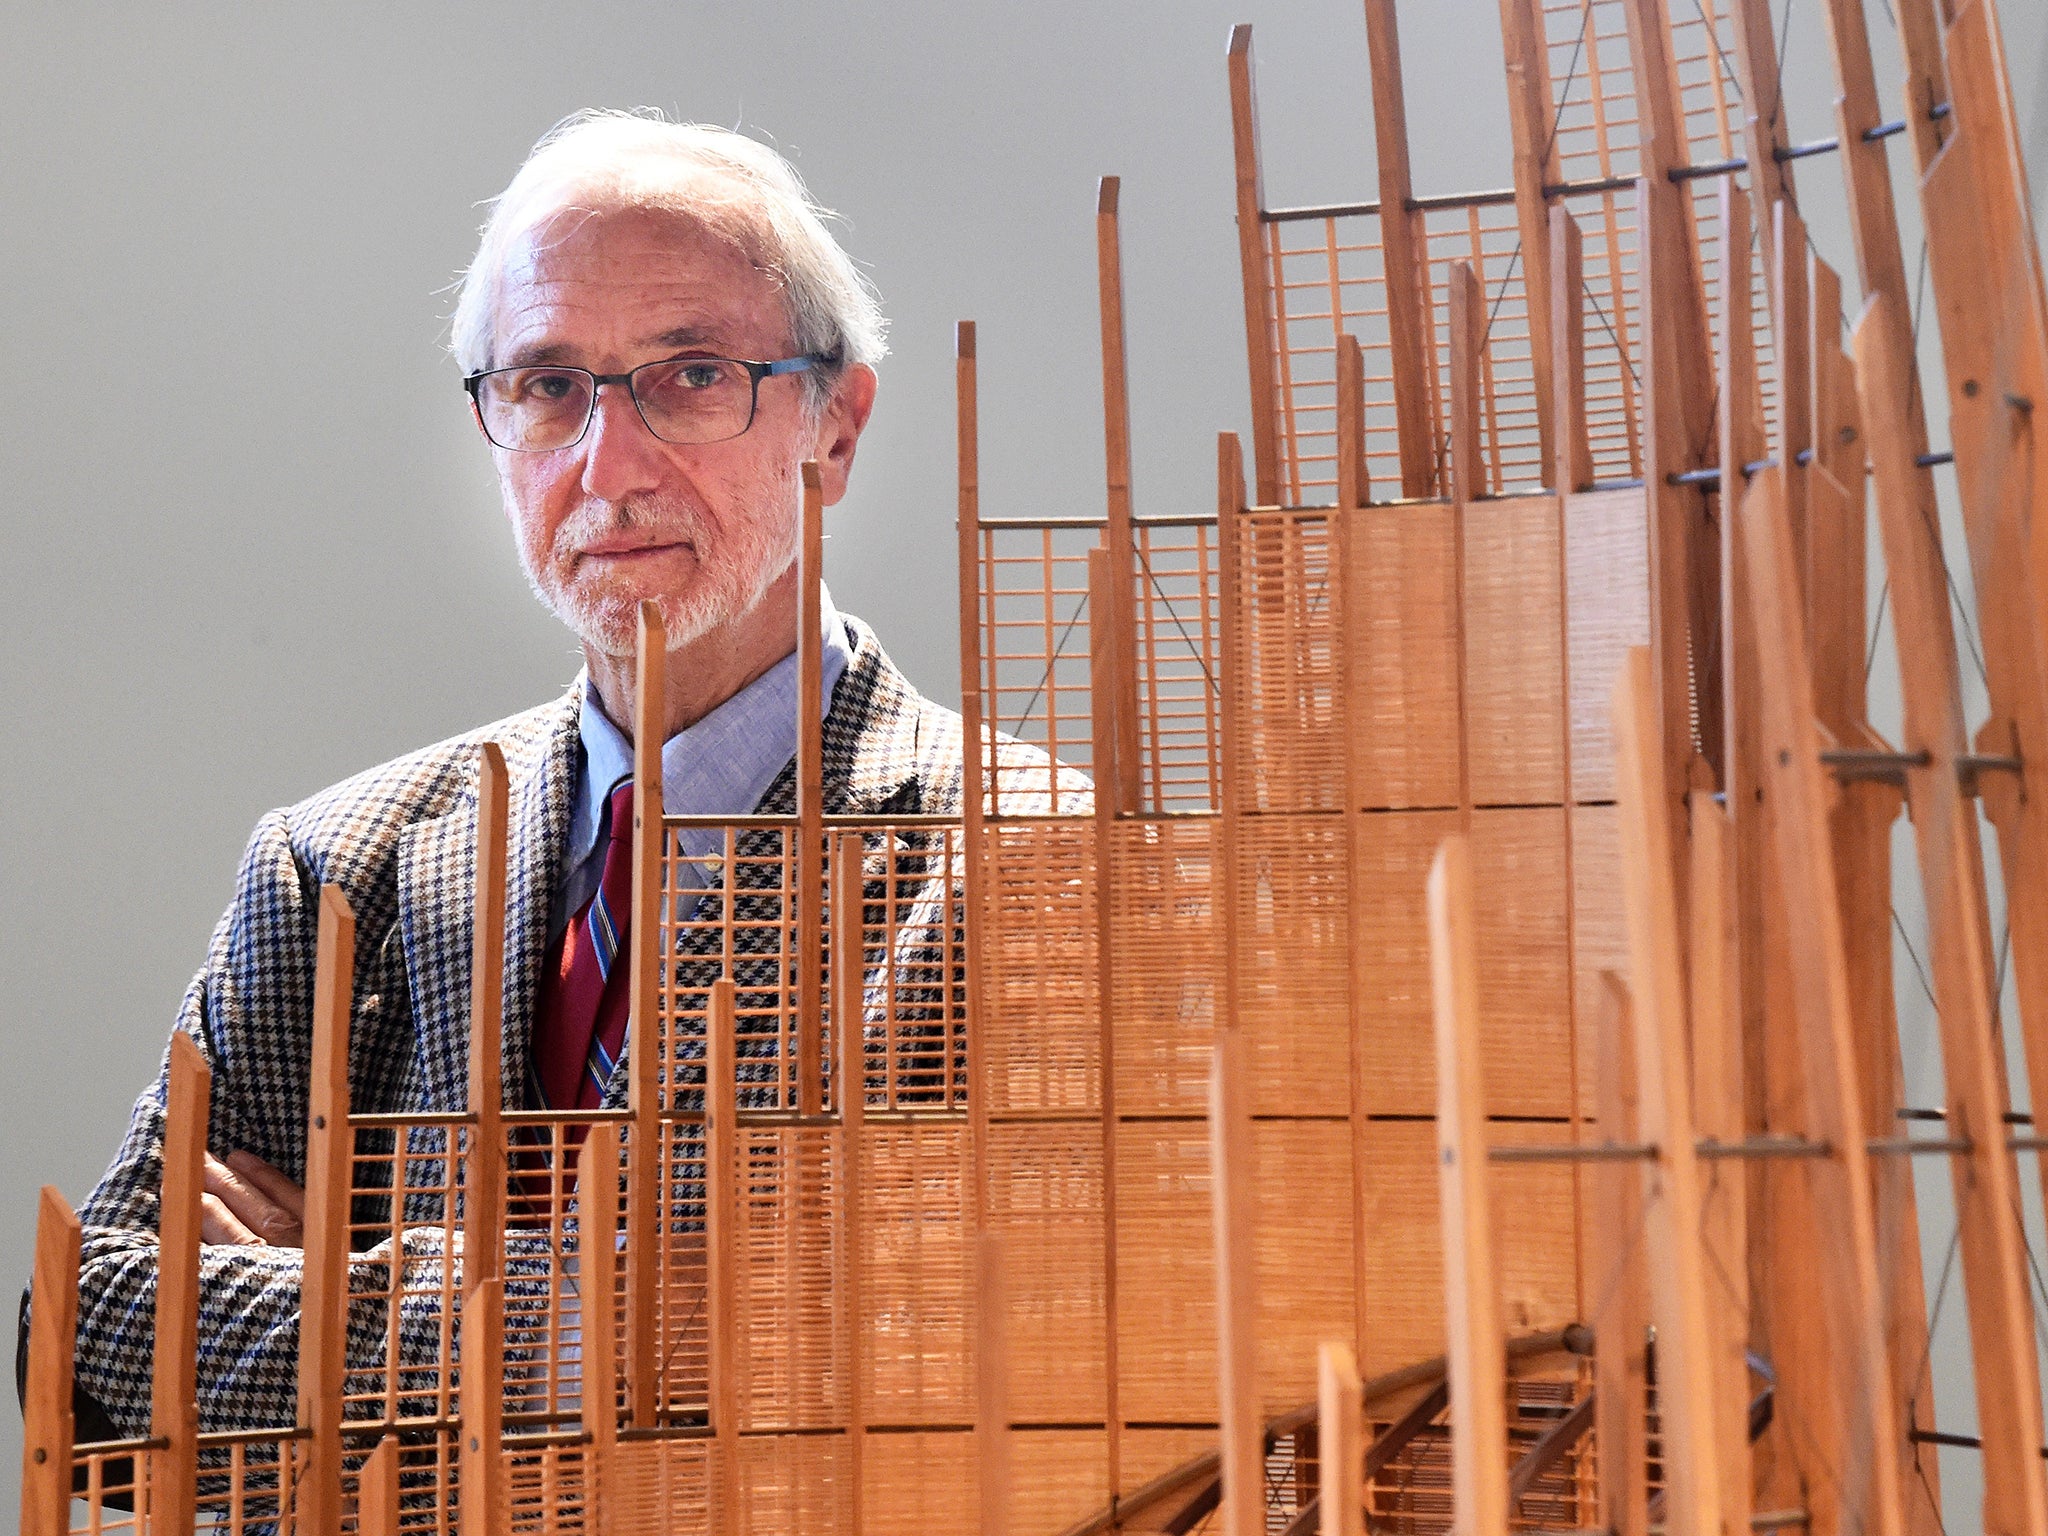 Italian architect Renzo Piano will be designing Zwirner’s new headquarters in New York